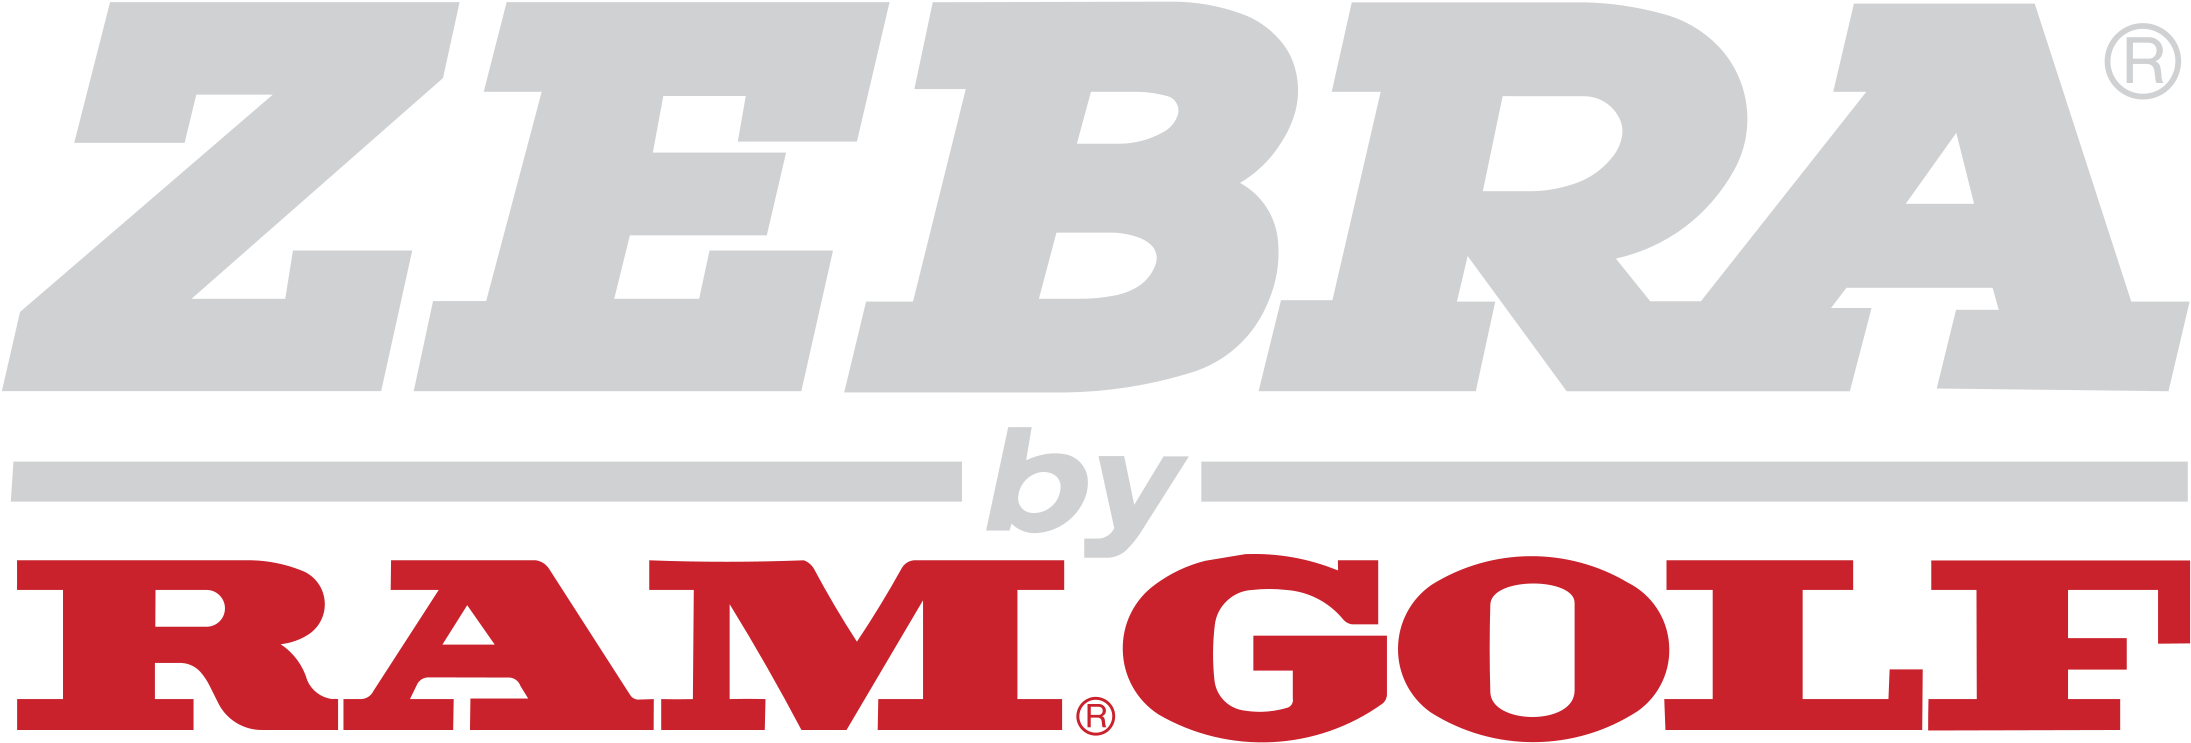 Zebra By Golf Logo Png Transparent Freebie - Ram Golf (2400x2400), Png Download